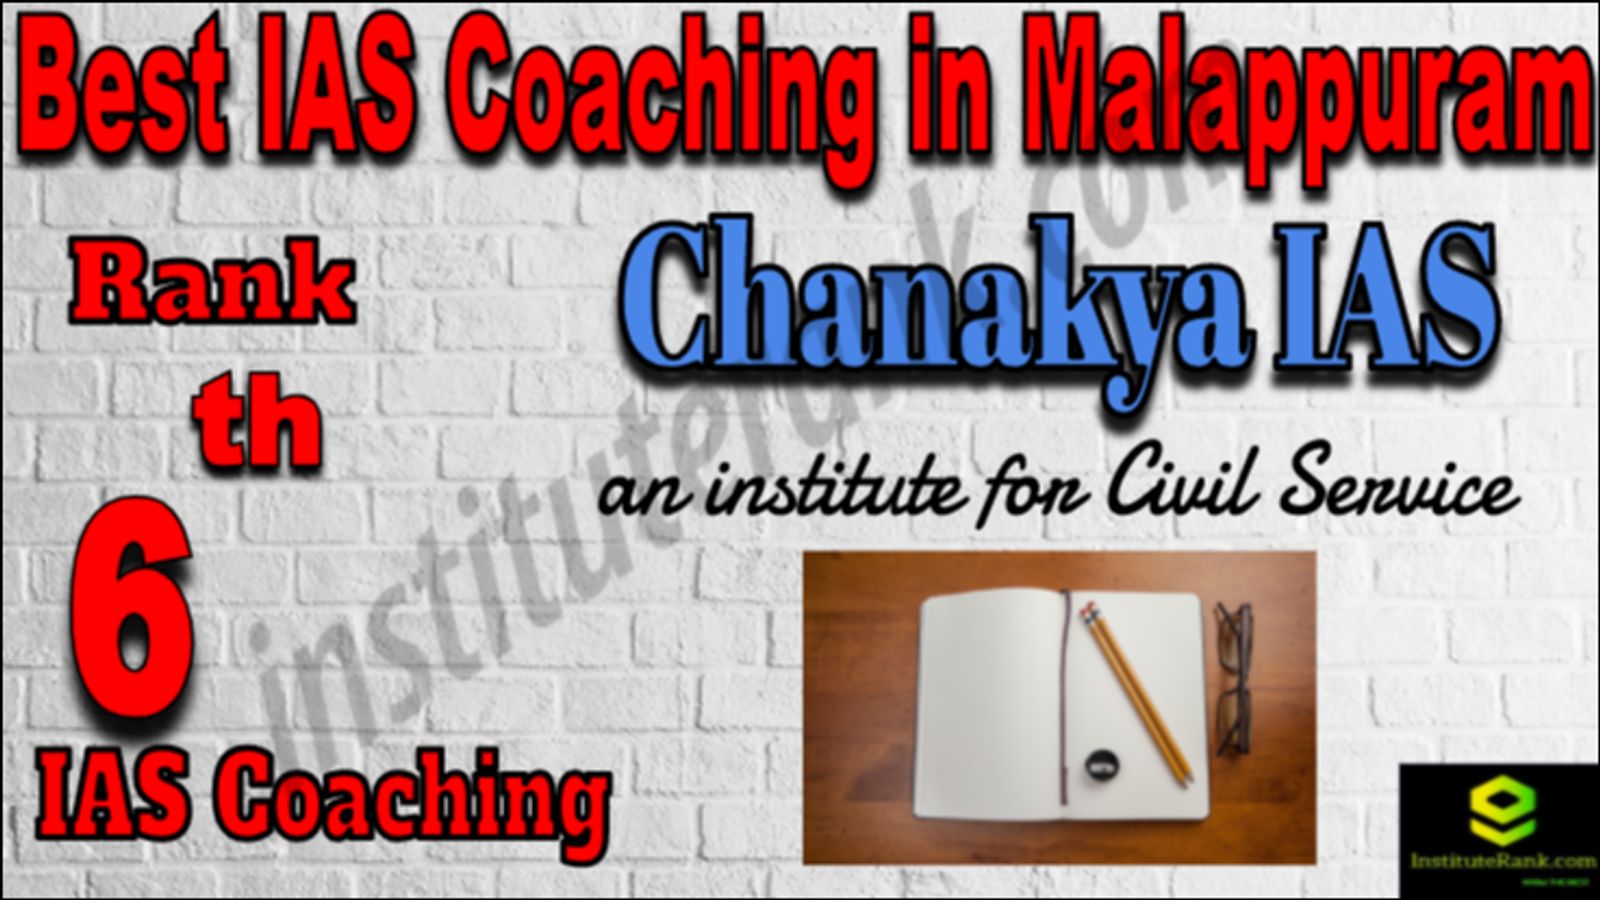 Rank 6 Best IAS Coaching in Malappuram